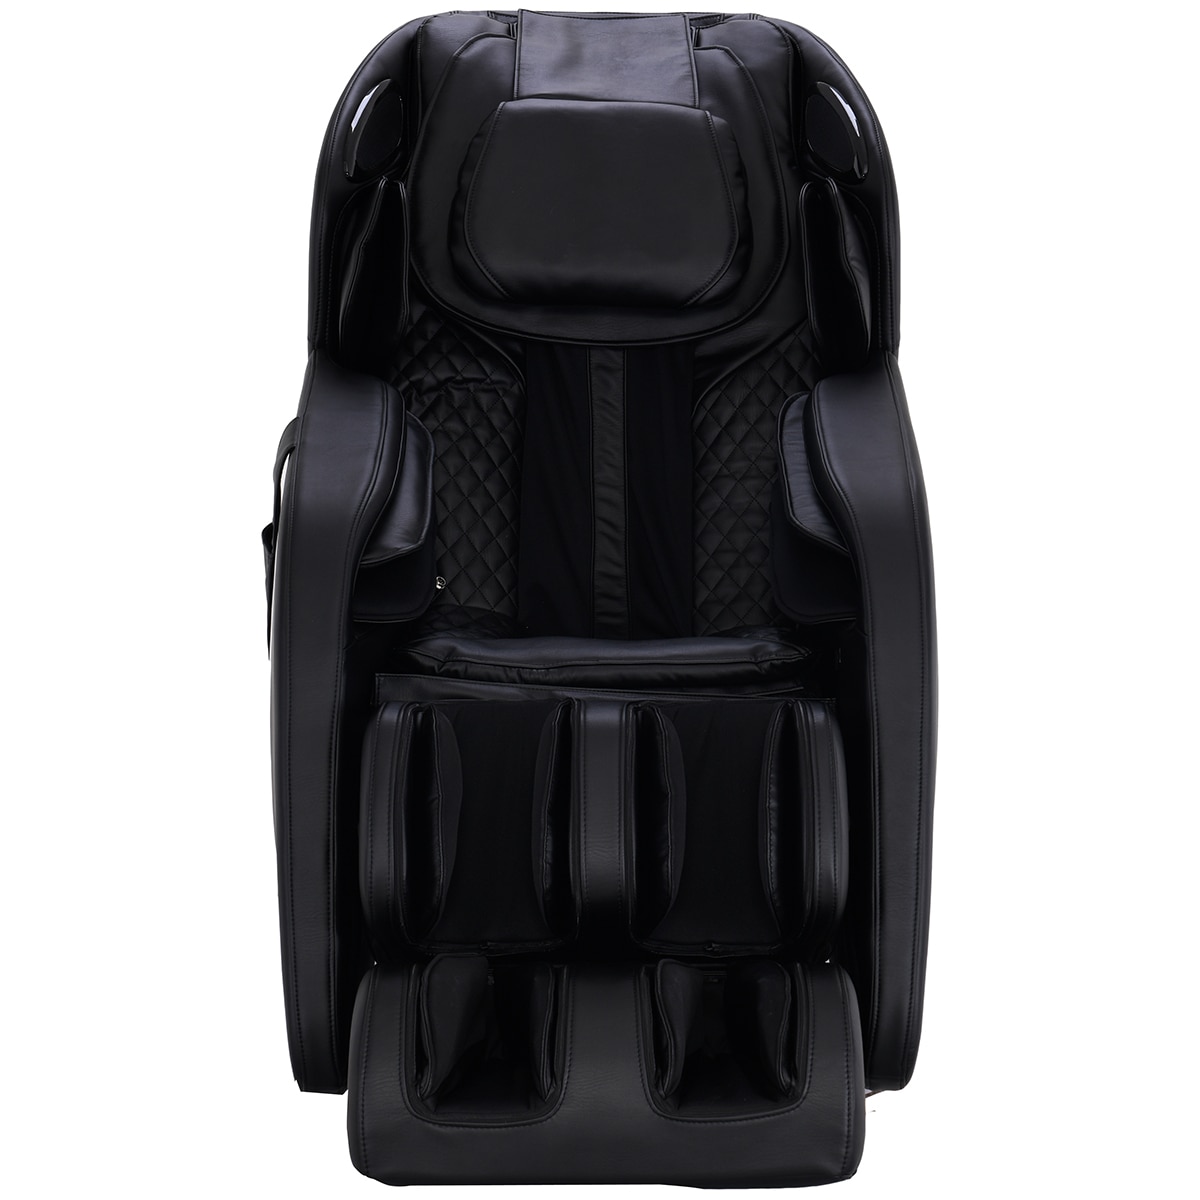 Iyume Massage Chair 6602 Black | Costco Australia